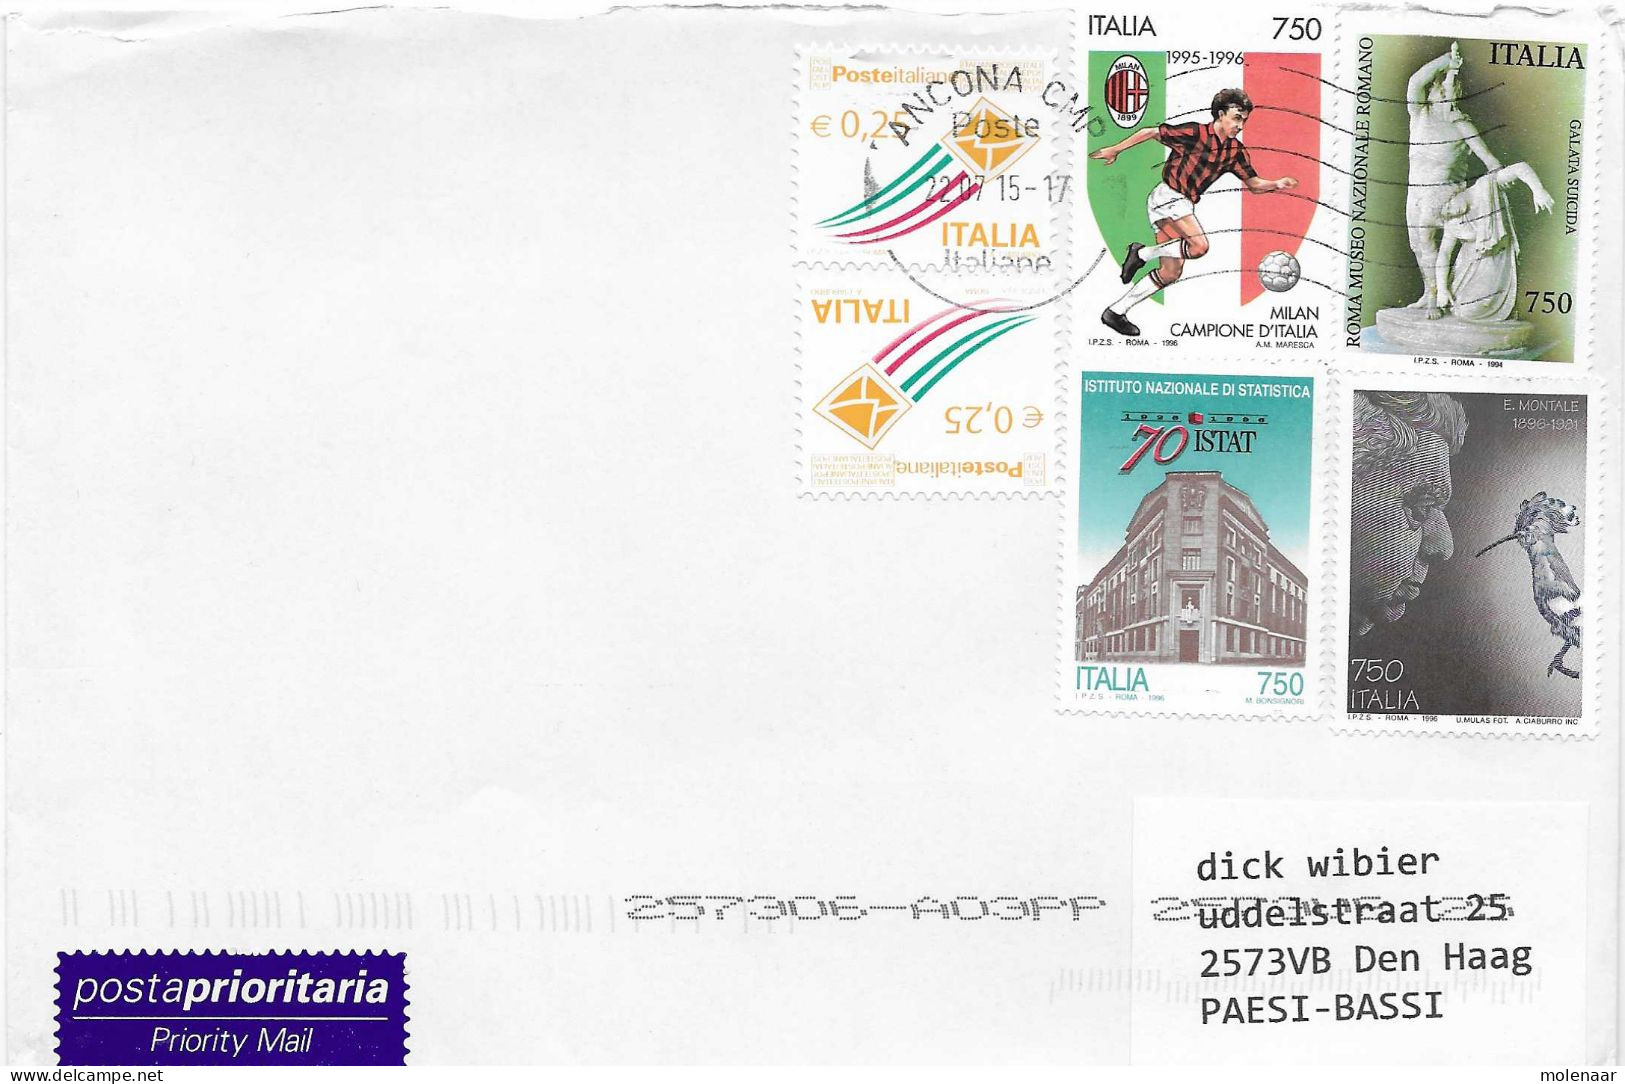 Postzegels > Europa > Finland > 2011-2020 > Brief Met 5 Postzegels (17698) - Lettres & Documents